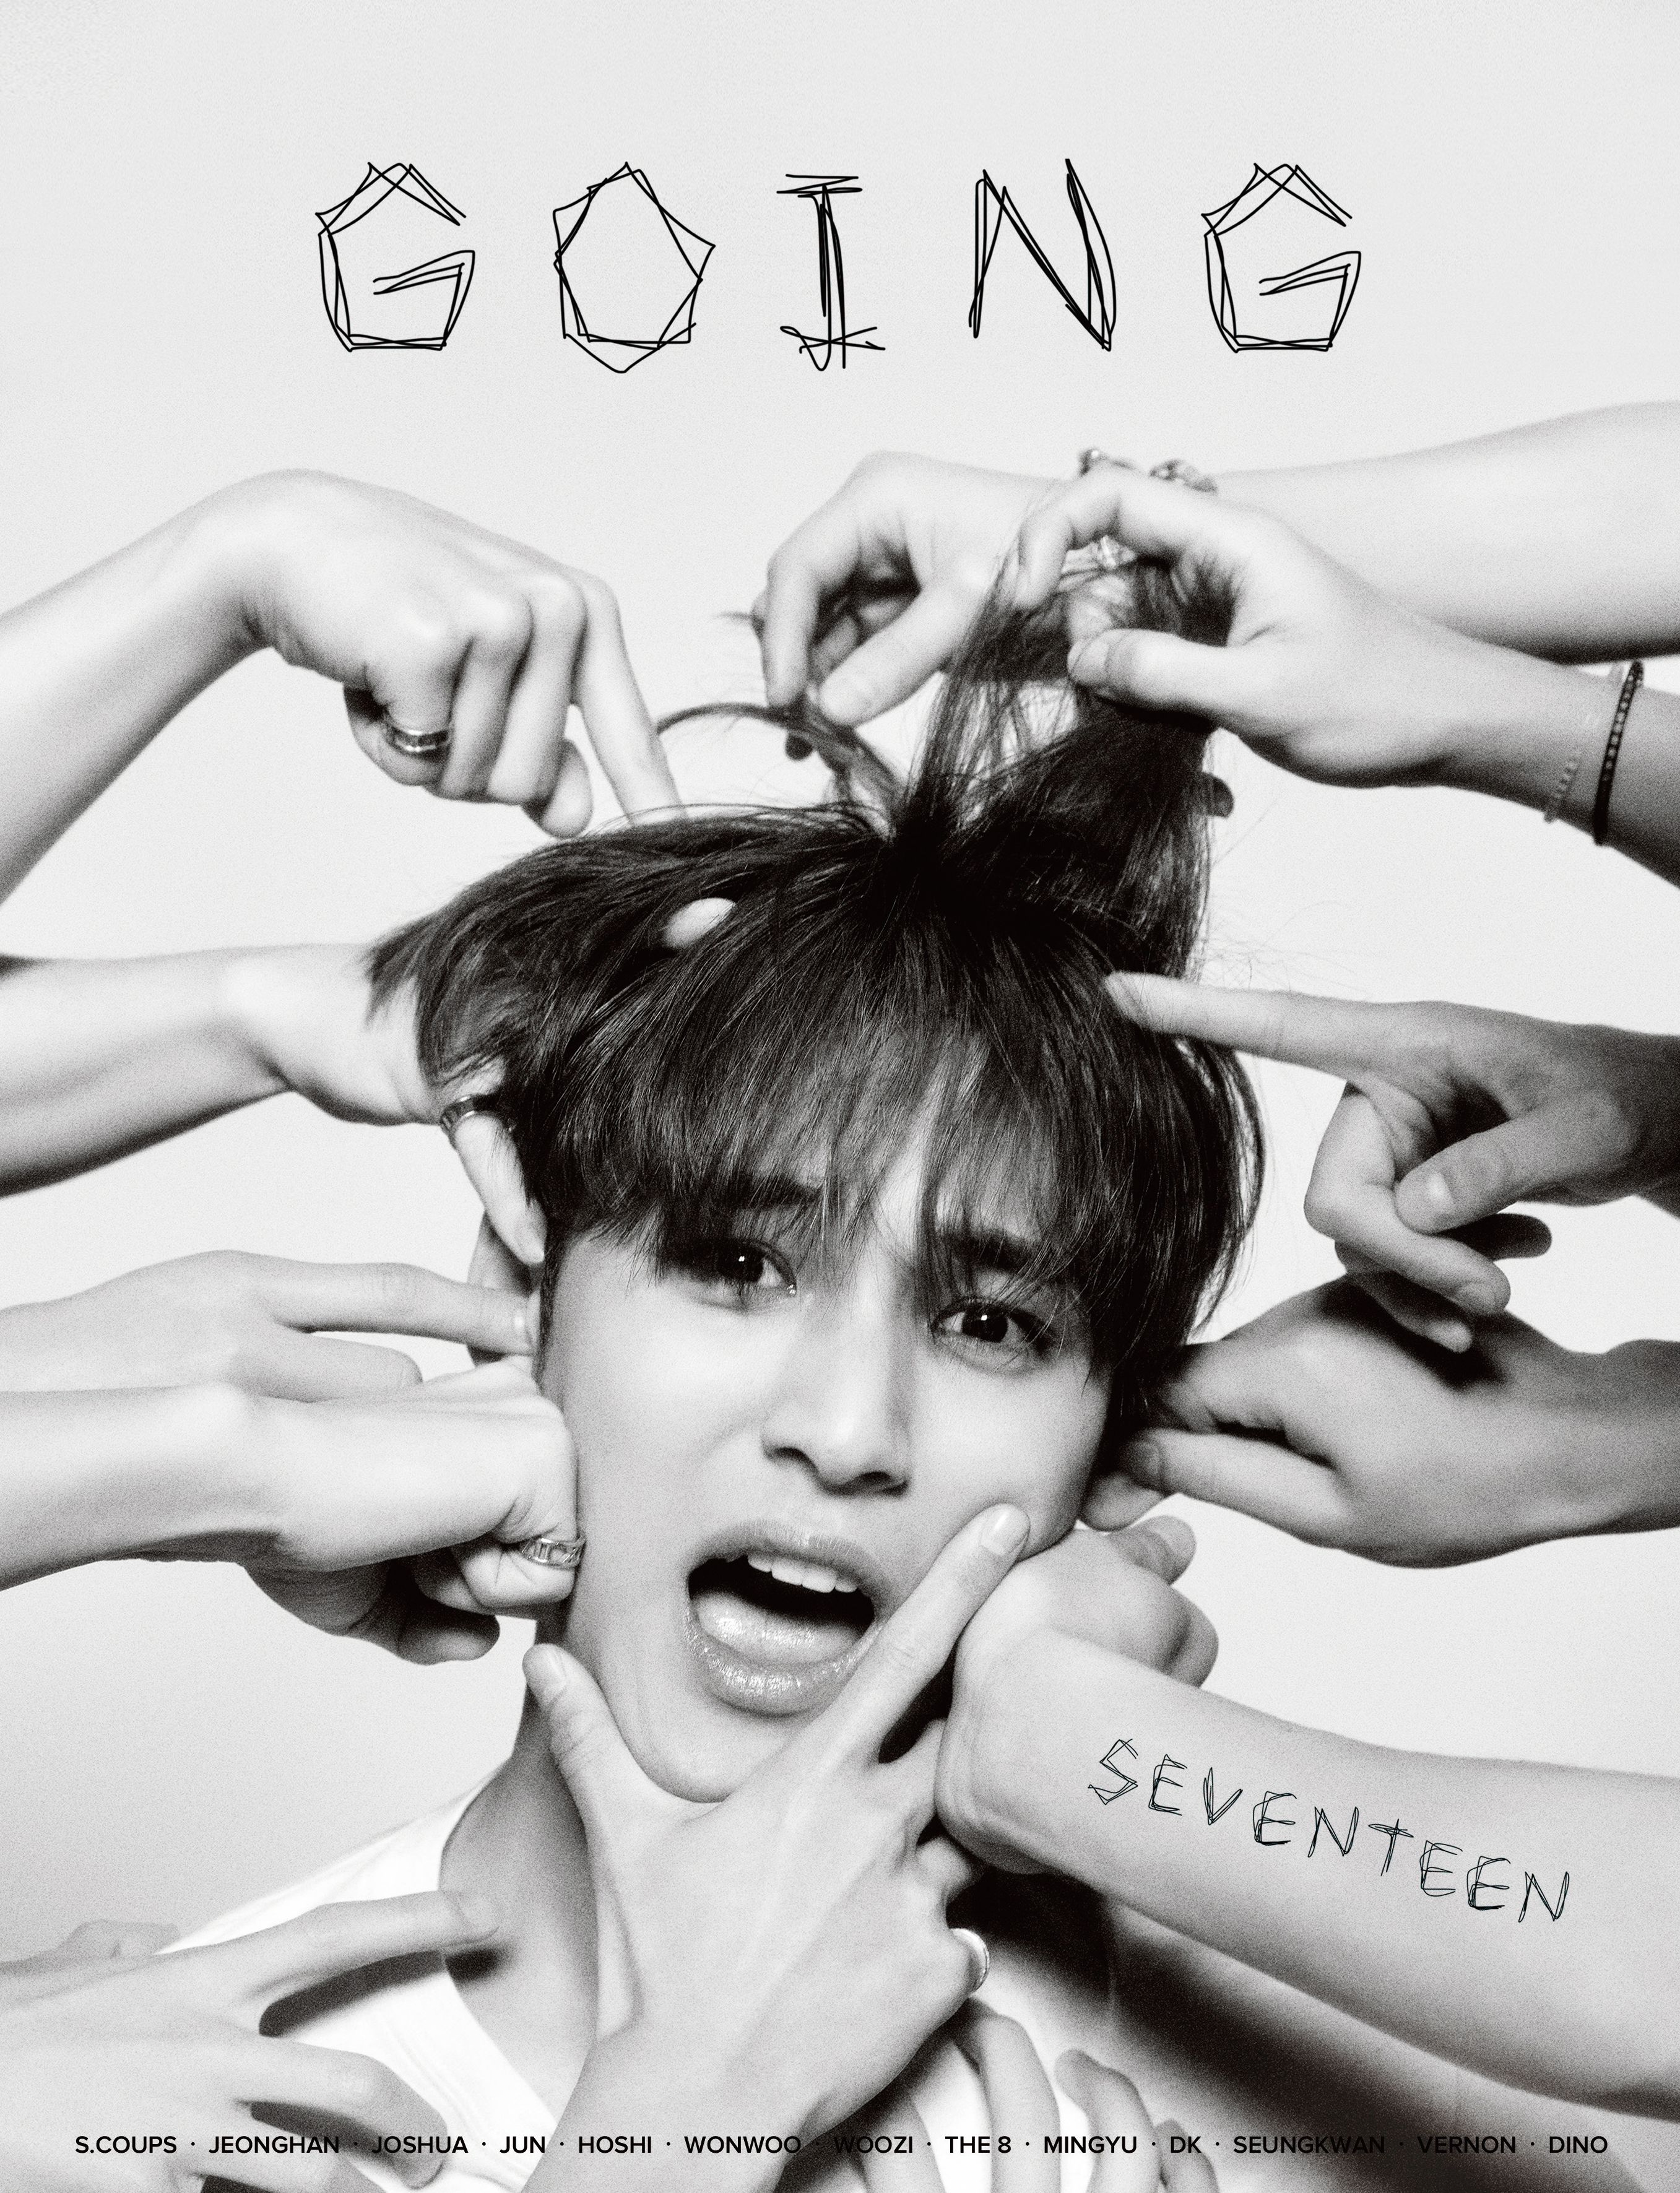 SEVENTEEN [GOING] Magazine Back Cover